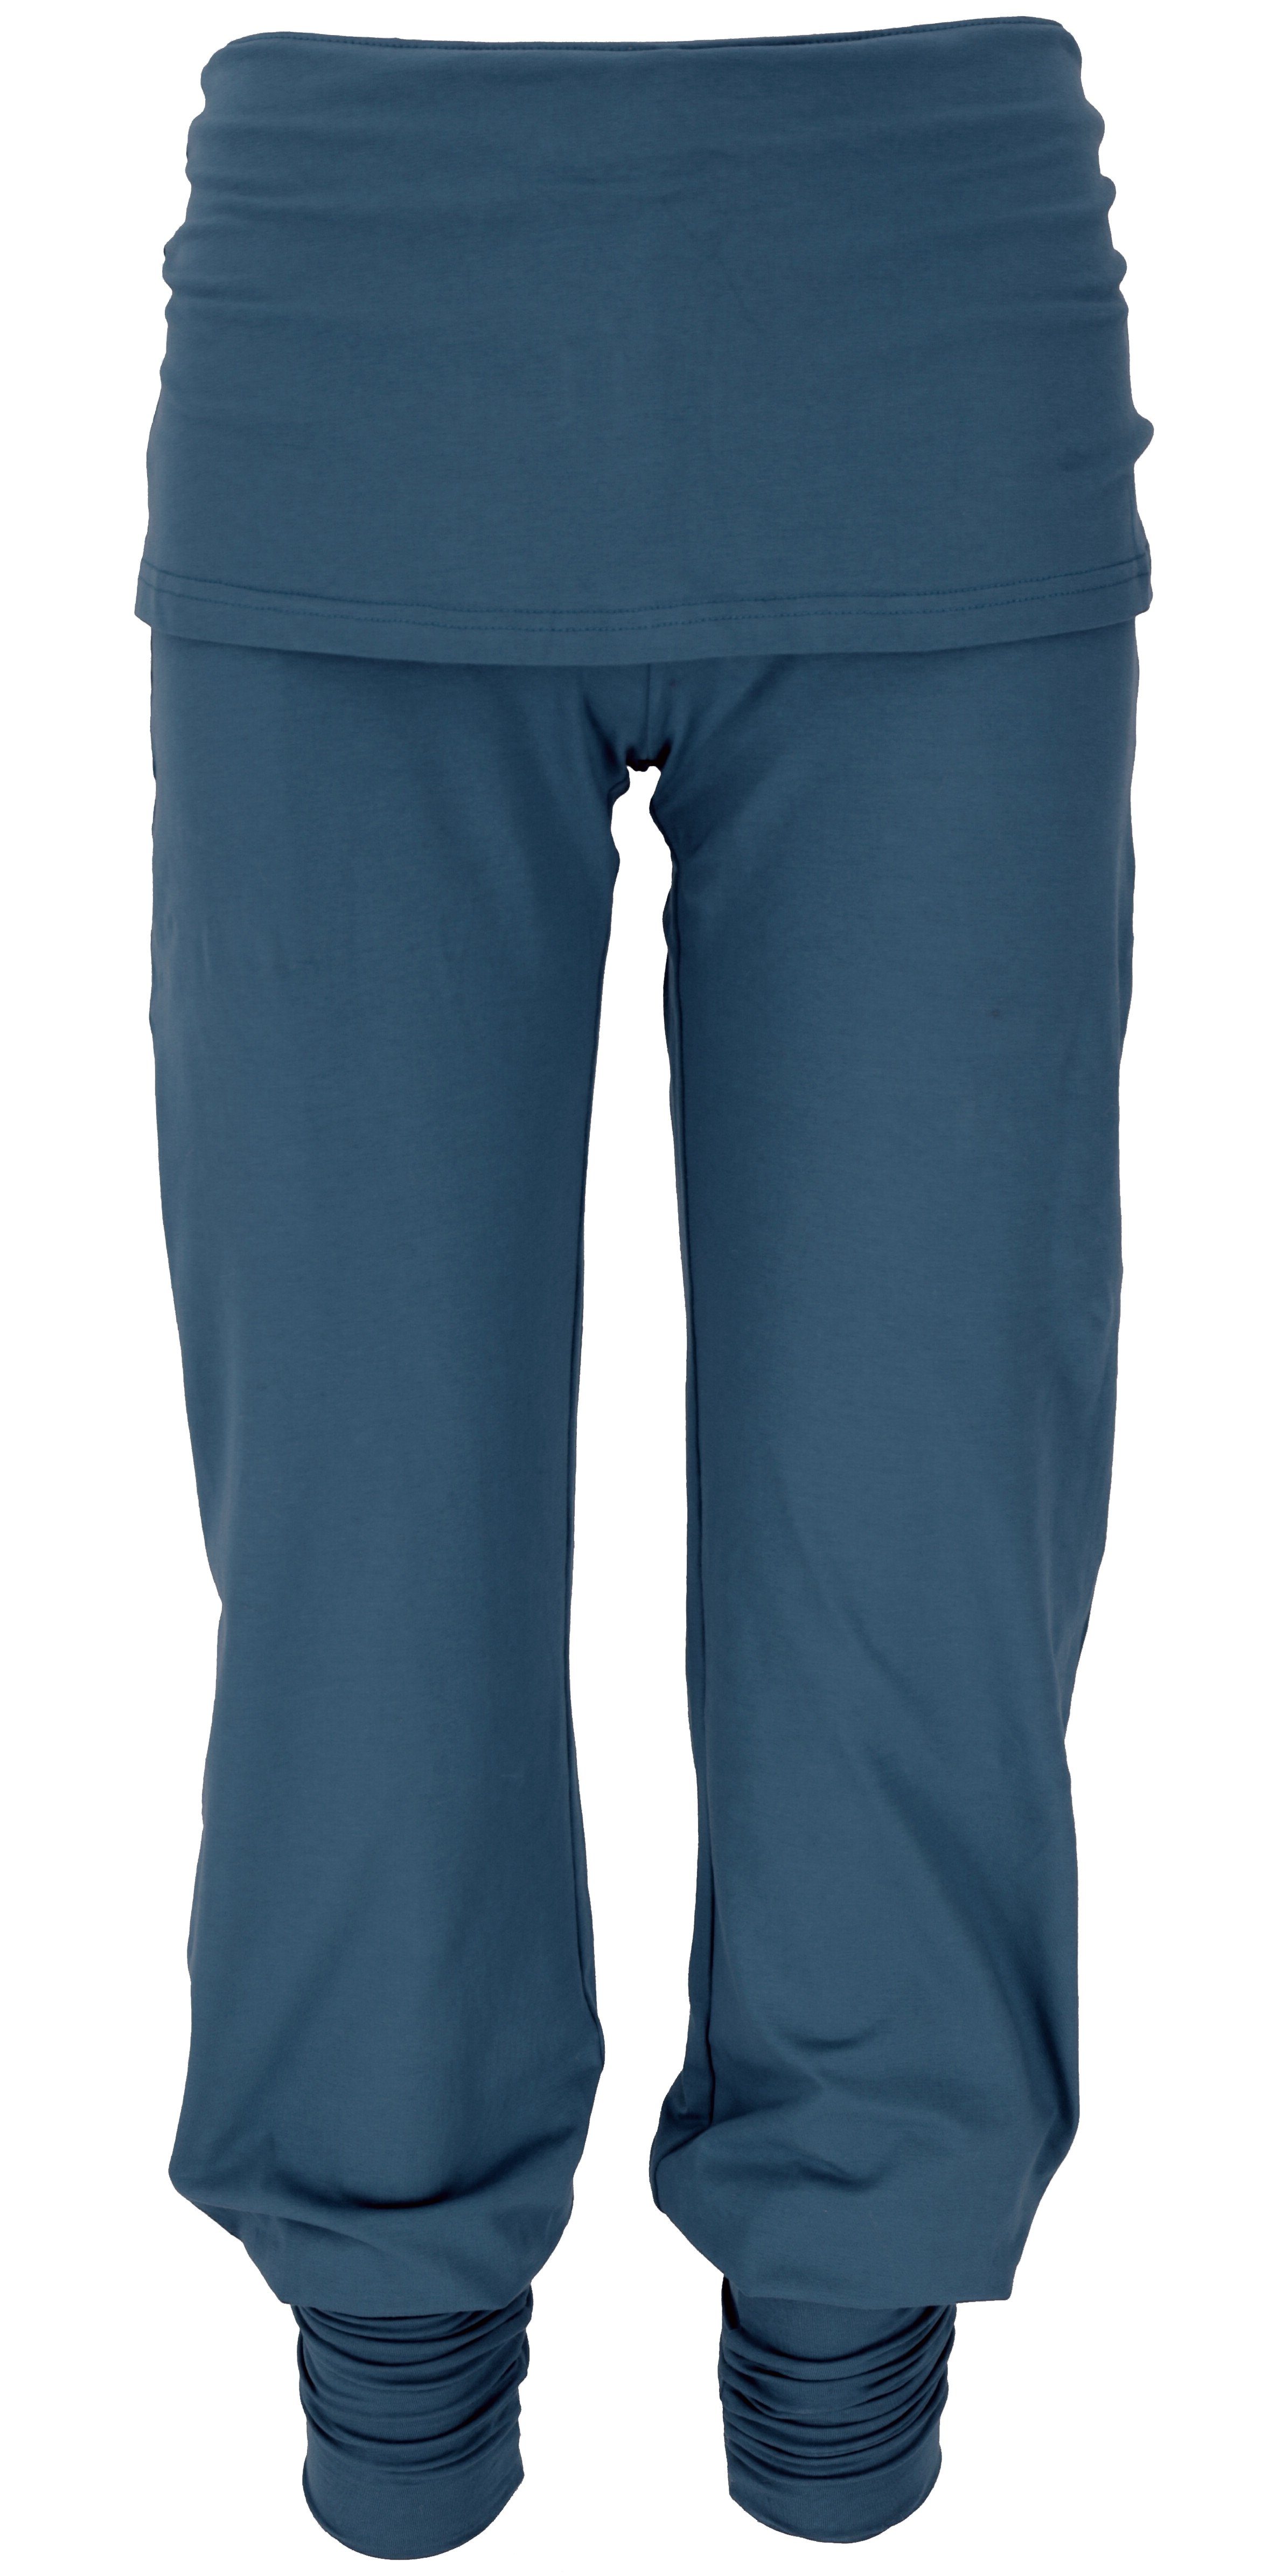 Guru-Shop Relaxhose Yoga-Hose mit Minirock orion blau alternative in - Bio-Qualität Bekleidung orion